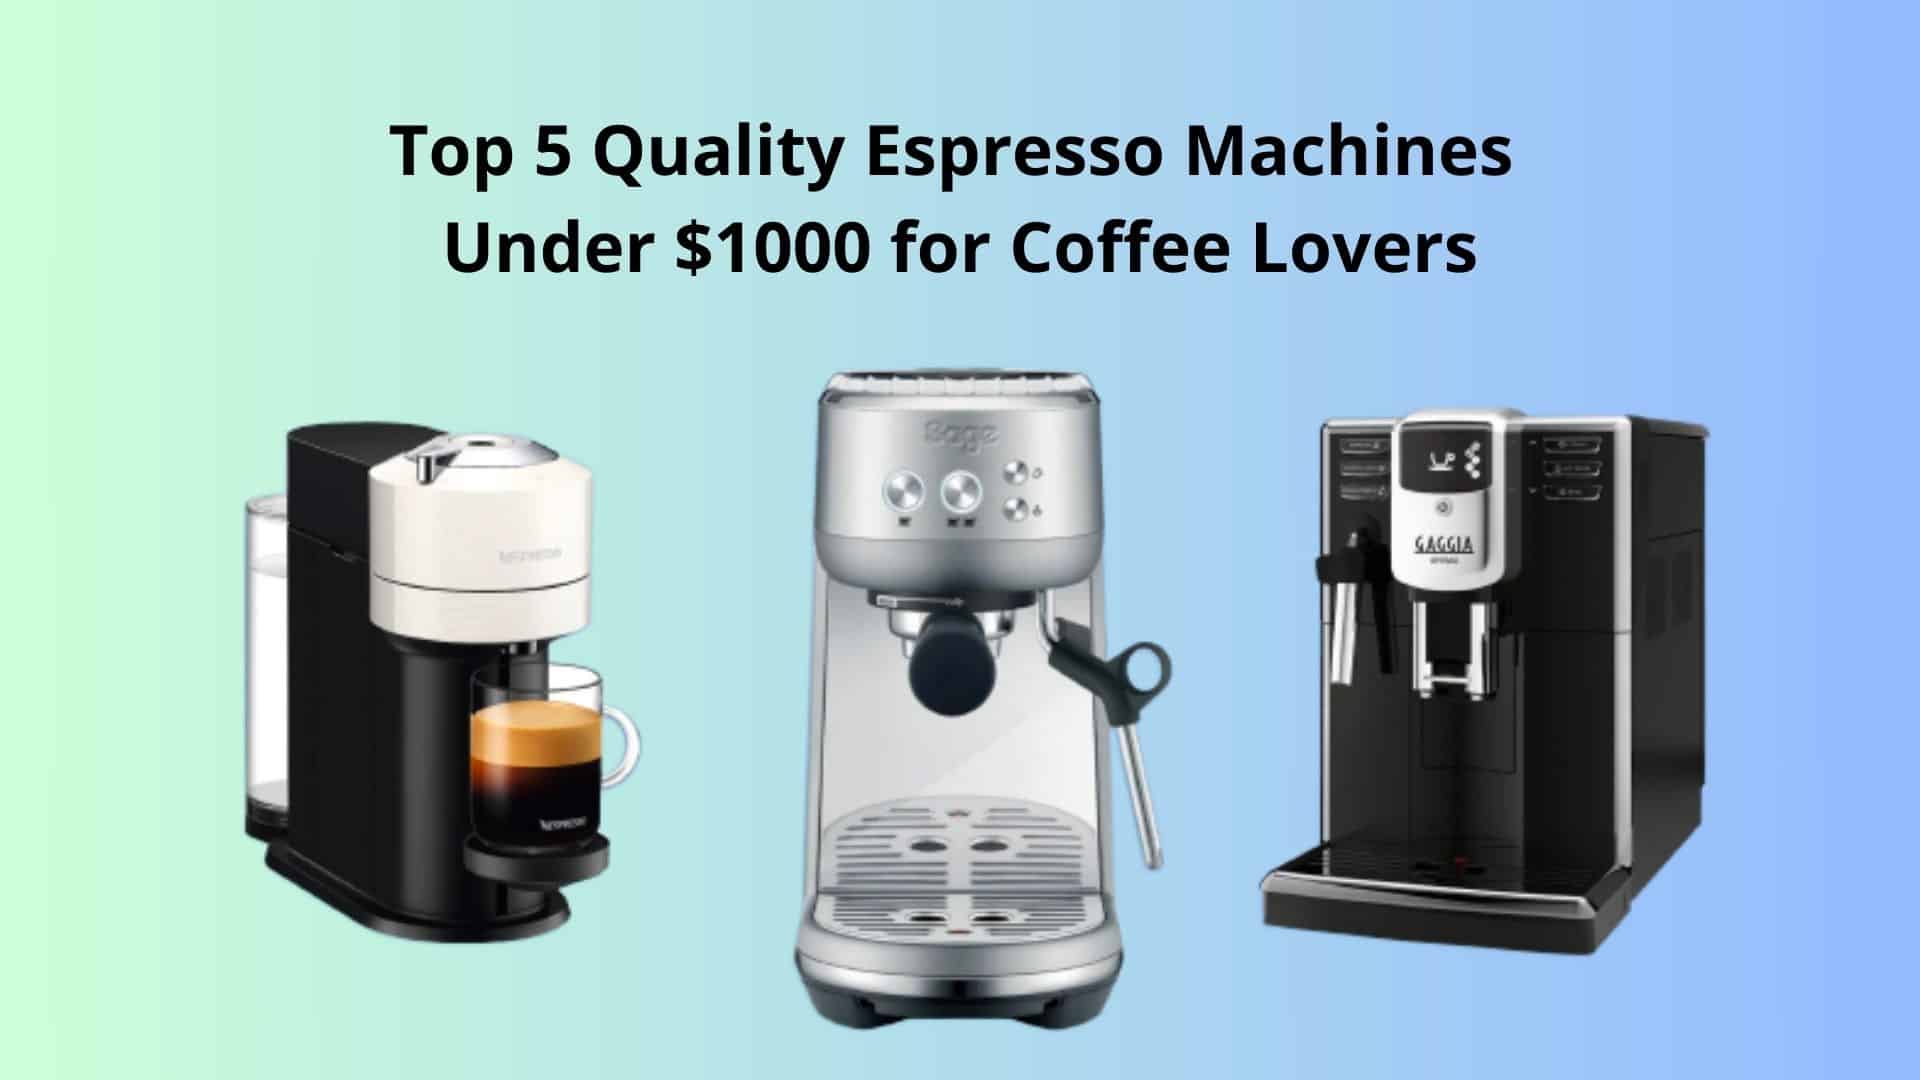 Top 5 quality espresso machines for under $1000